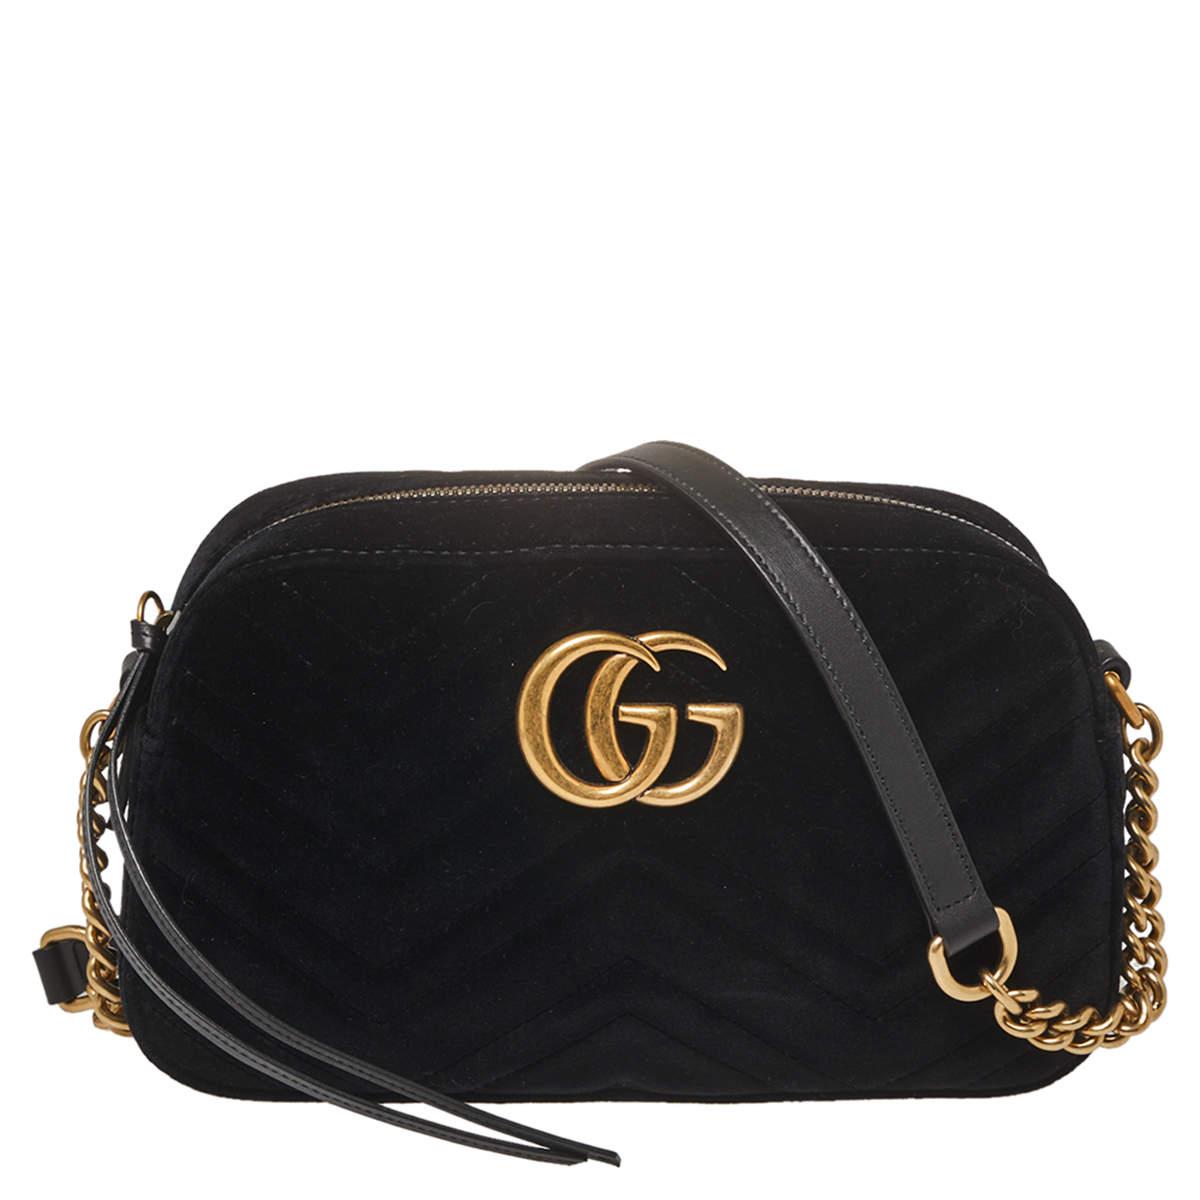 Gucci GG Marmont Velvet Camera Bag in Black